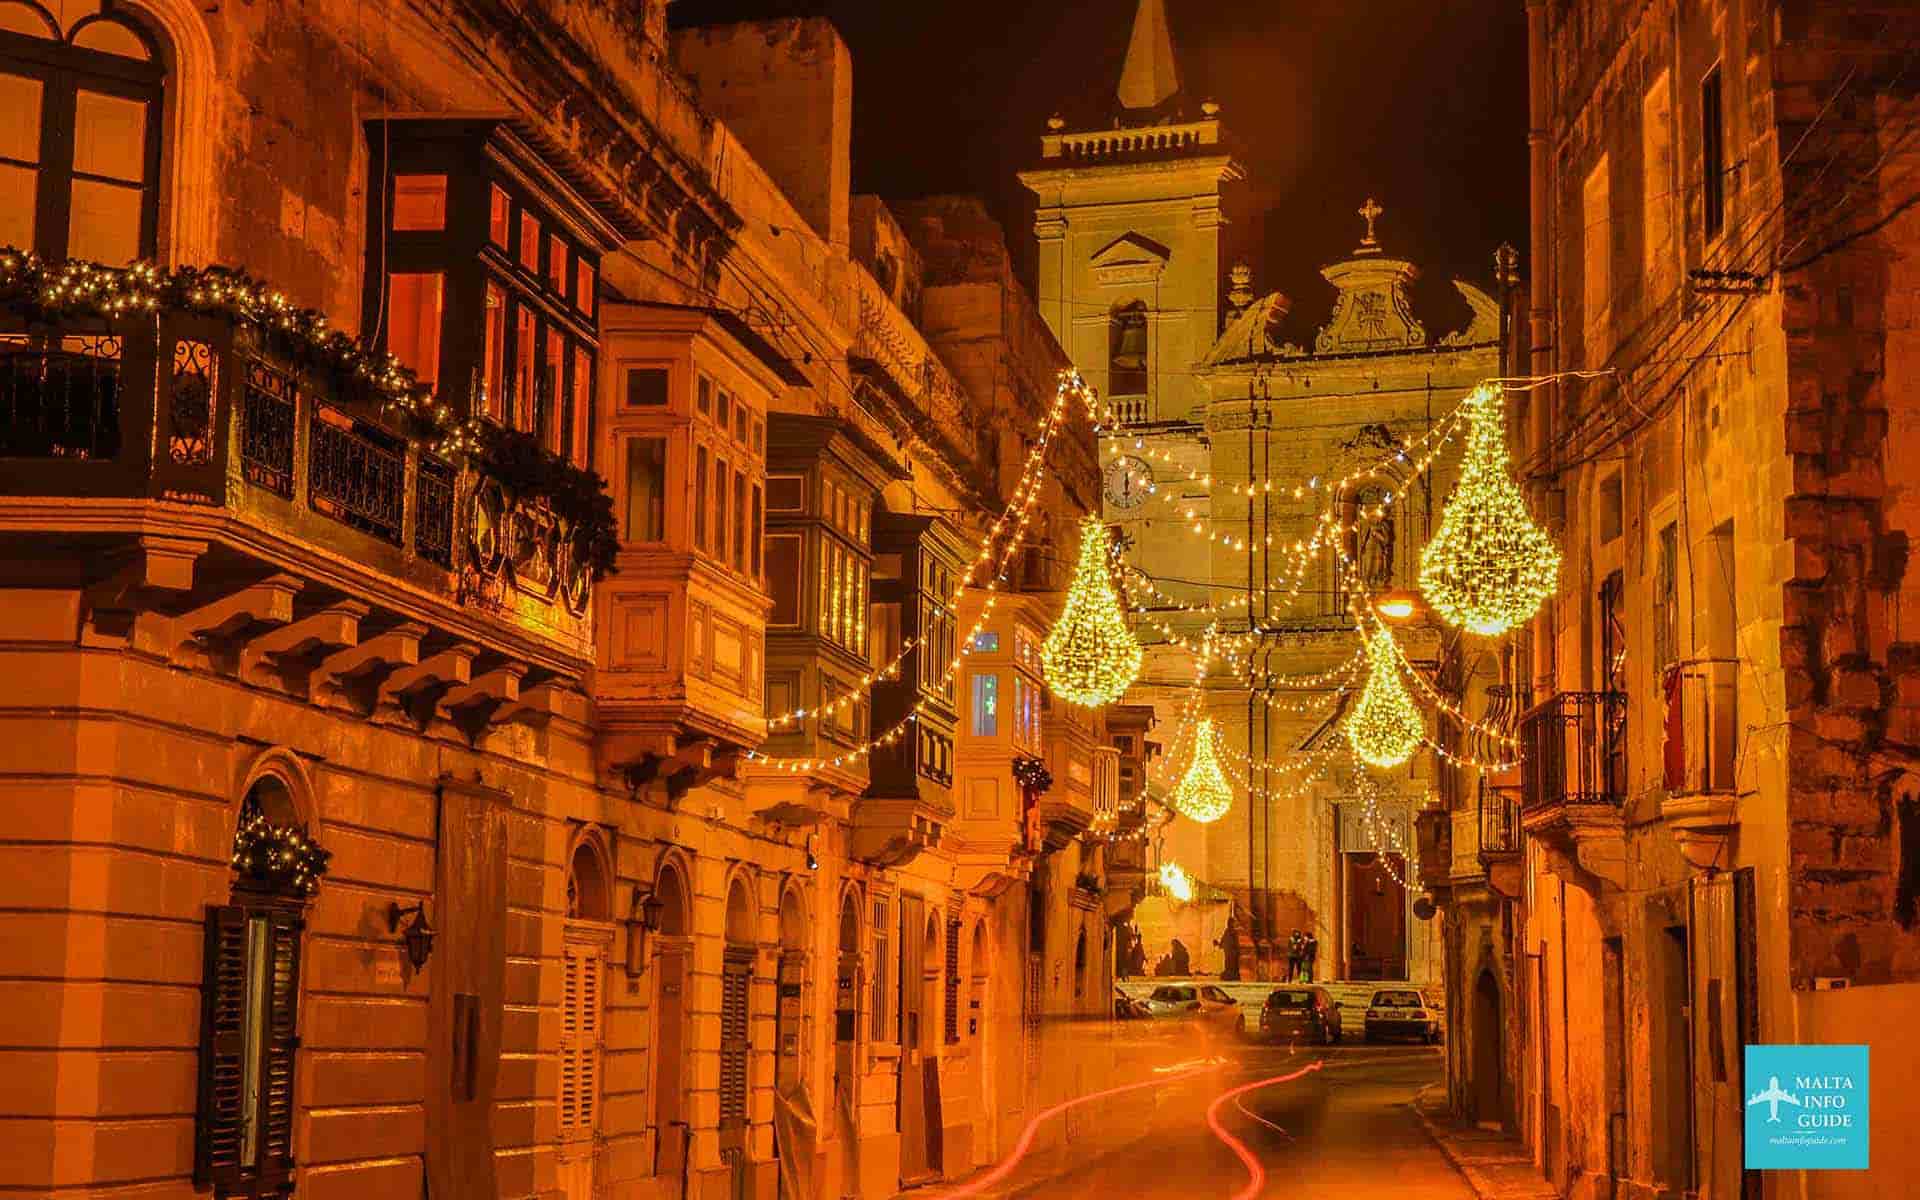 Tarxien streets lit up for the Christimas season.